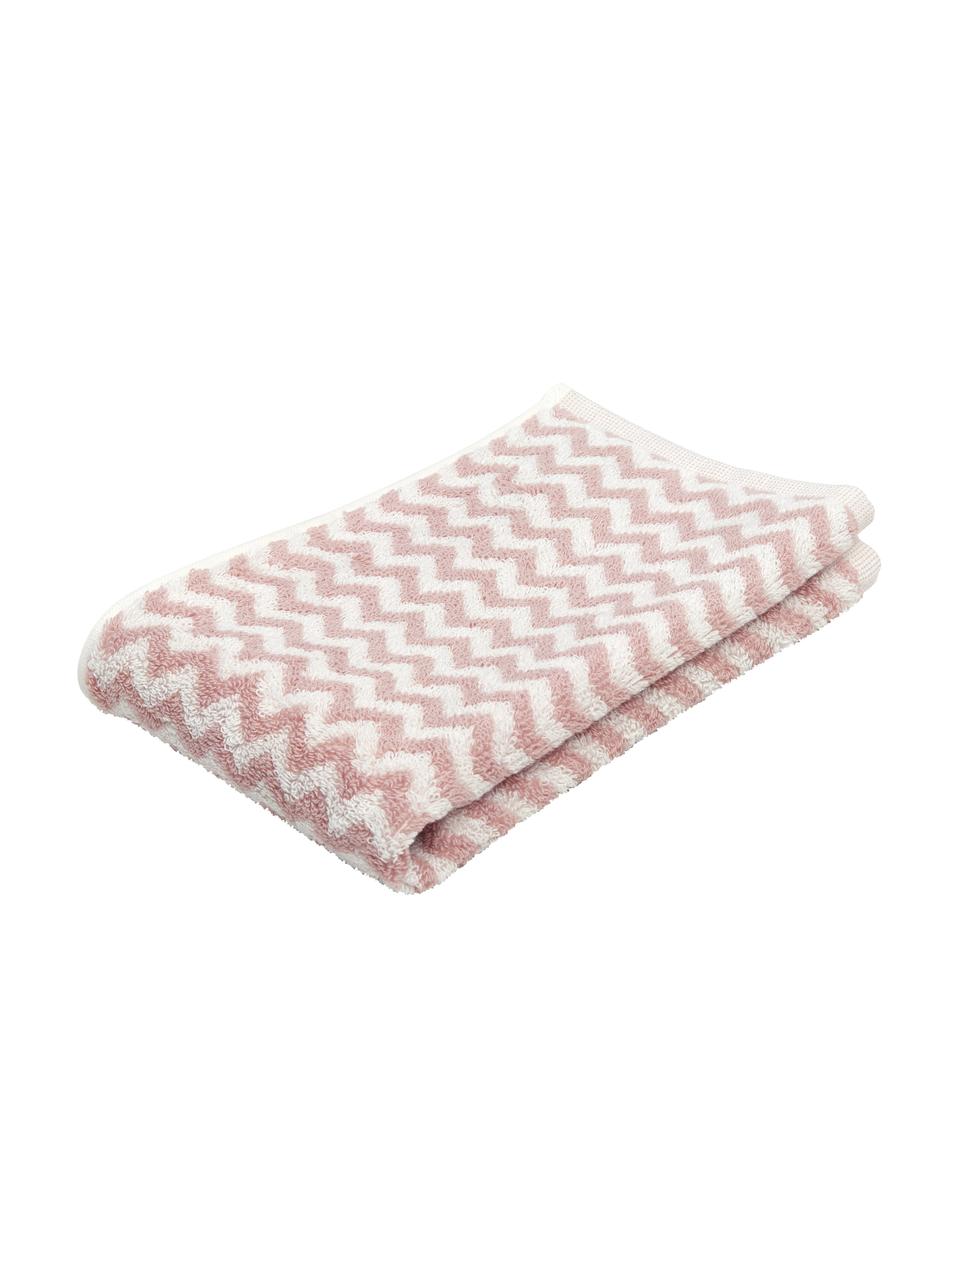 Asciugamano con motivo a zigzag Liv 2 pz, 100% cotone,
qualità media 550 g/m², Rosa, bianco crema, Asciugamano per ospiti, Larg. 30 x Lung. 50 cm, 2 pz